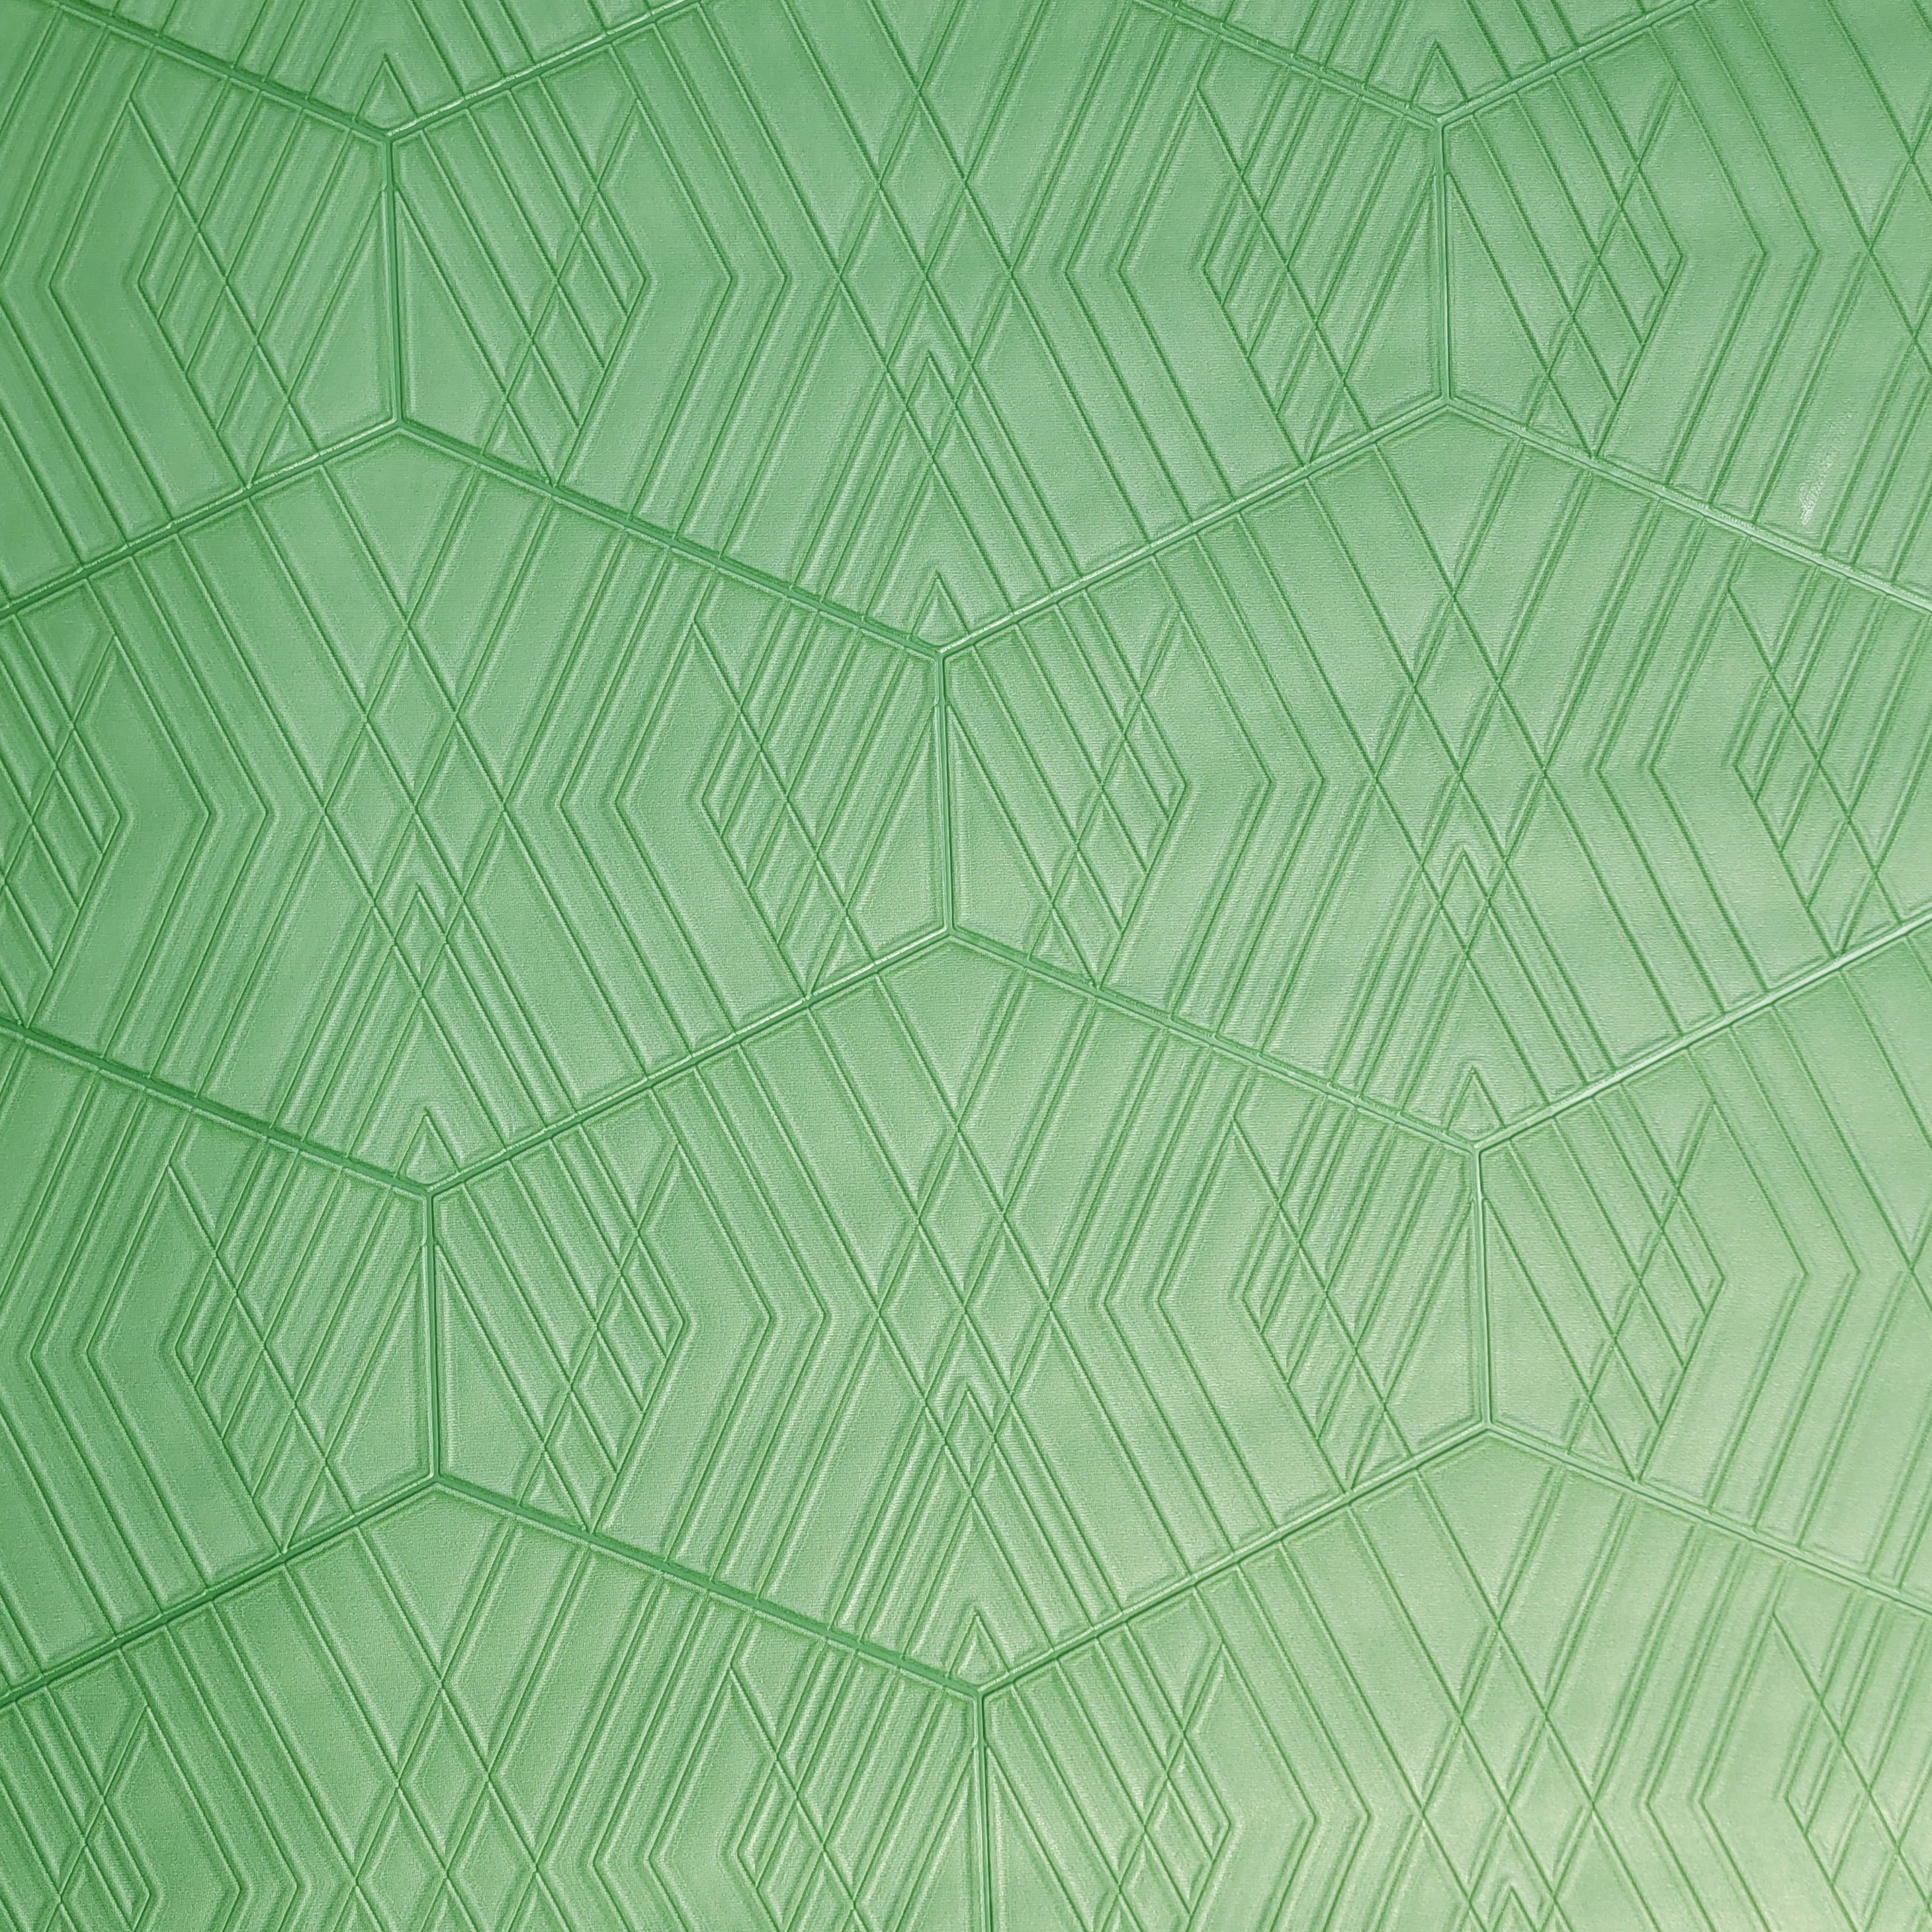 100+] Sage Green Laptop Wallpapers | Wallpapers.com